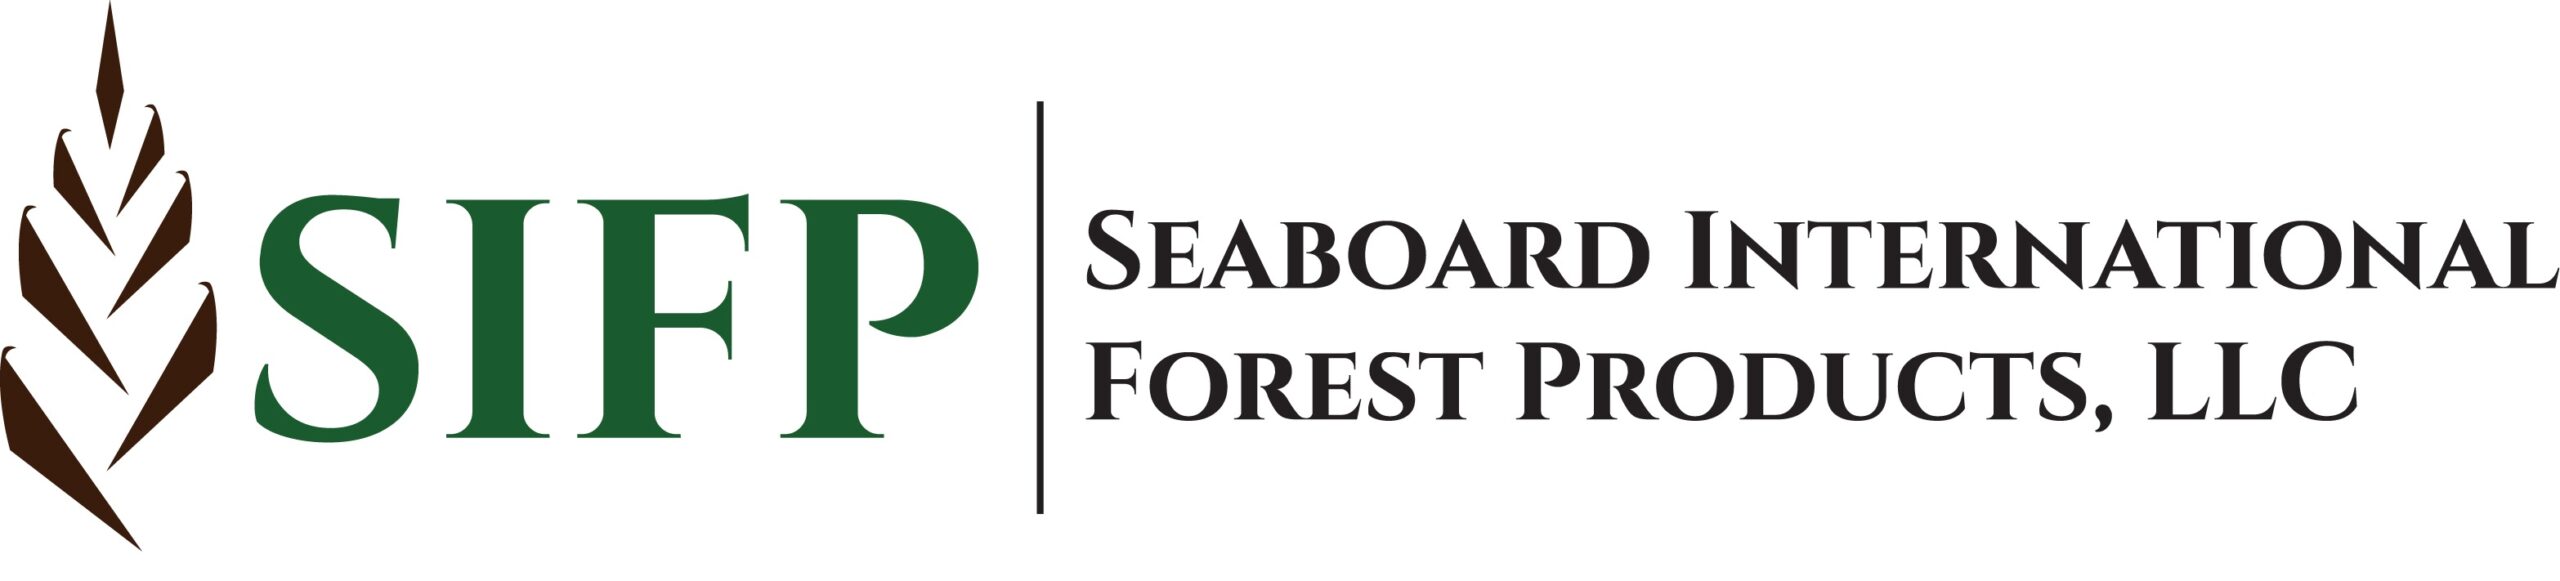 Seaboard International Forest Products, LLC